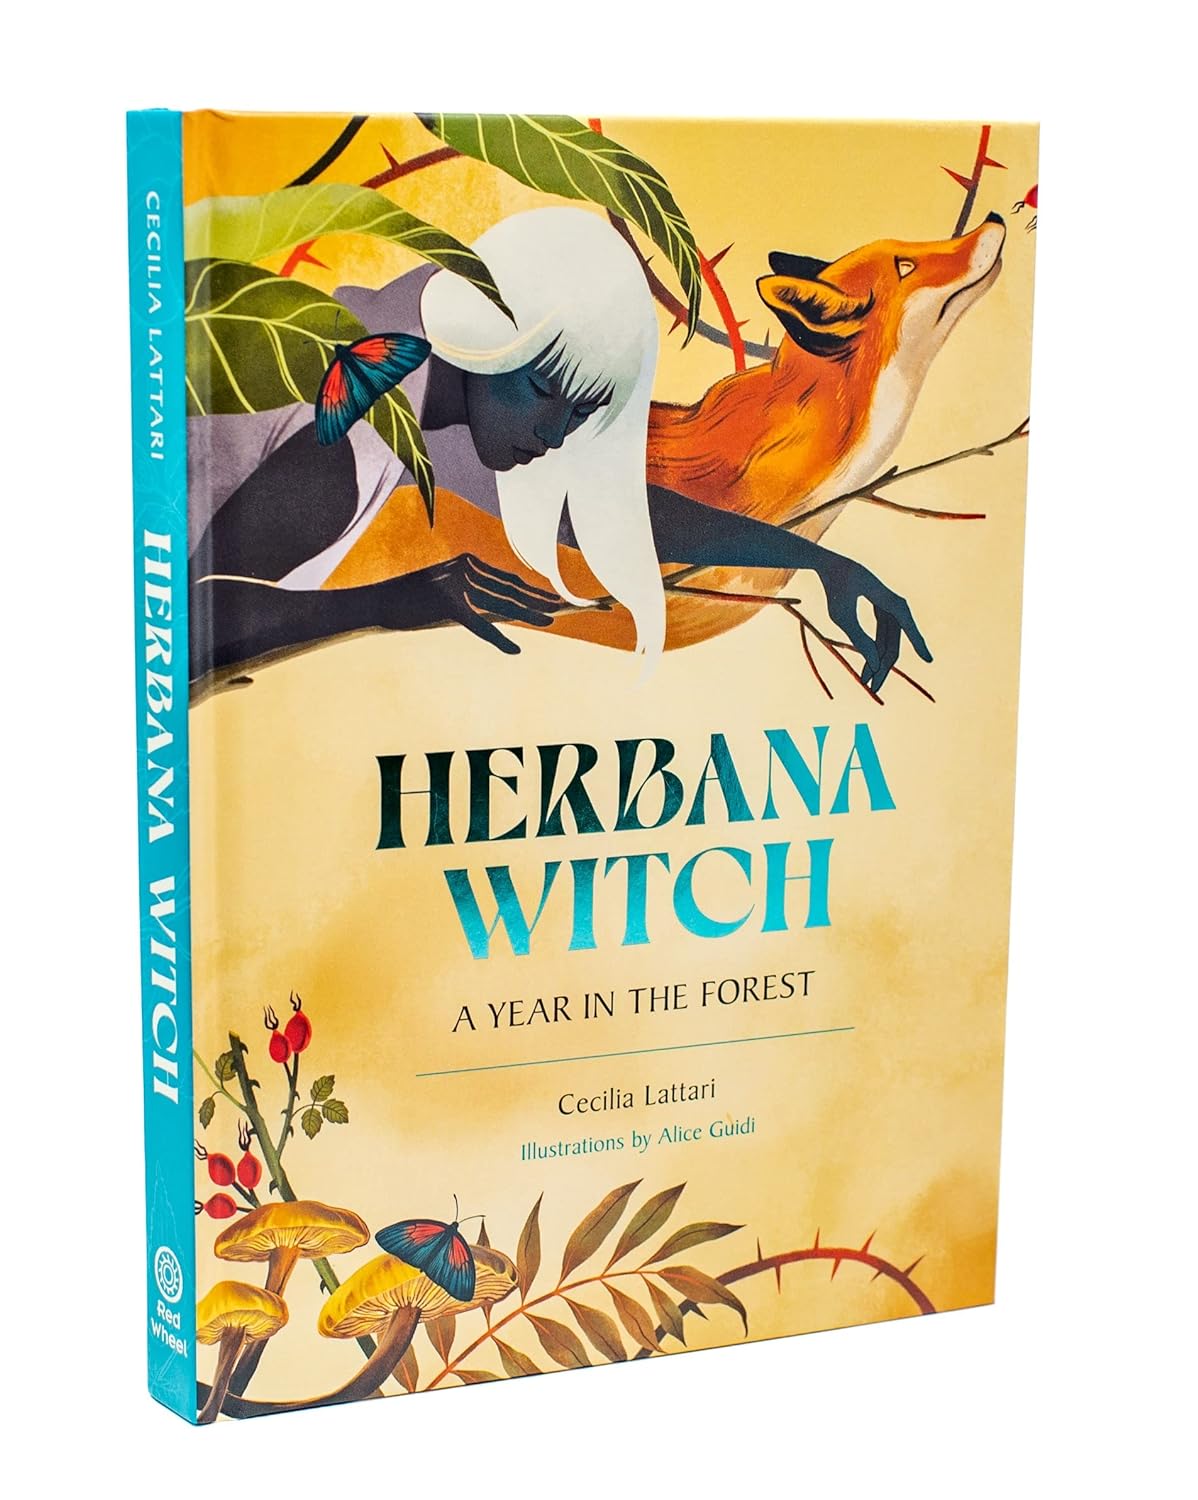 Herbana Witch by Cecilia Lattari